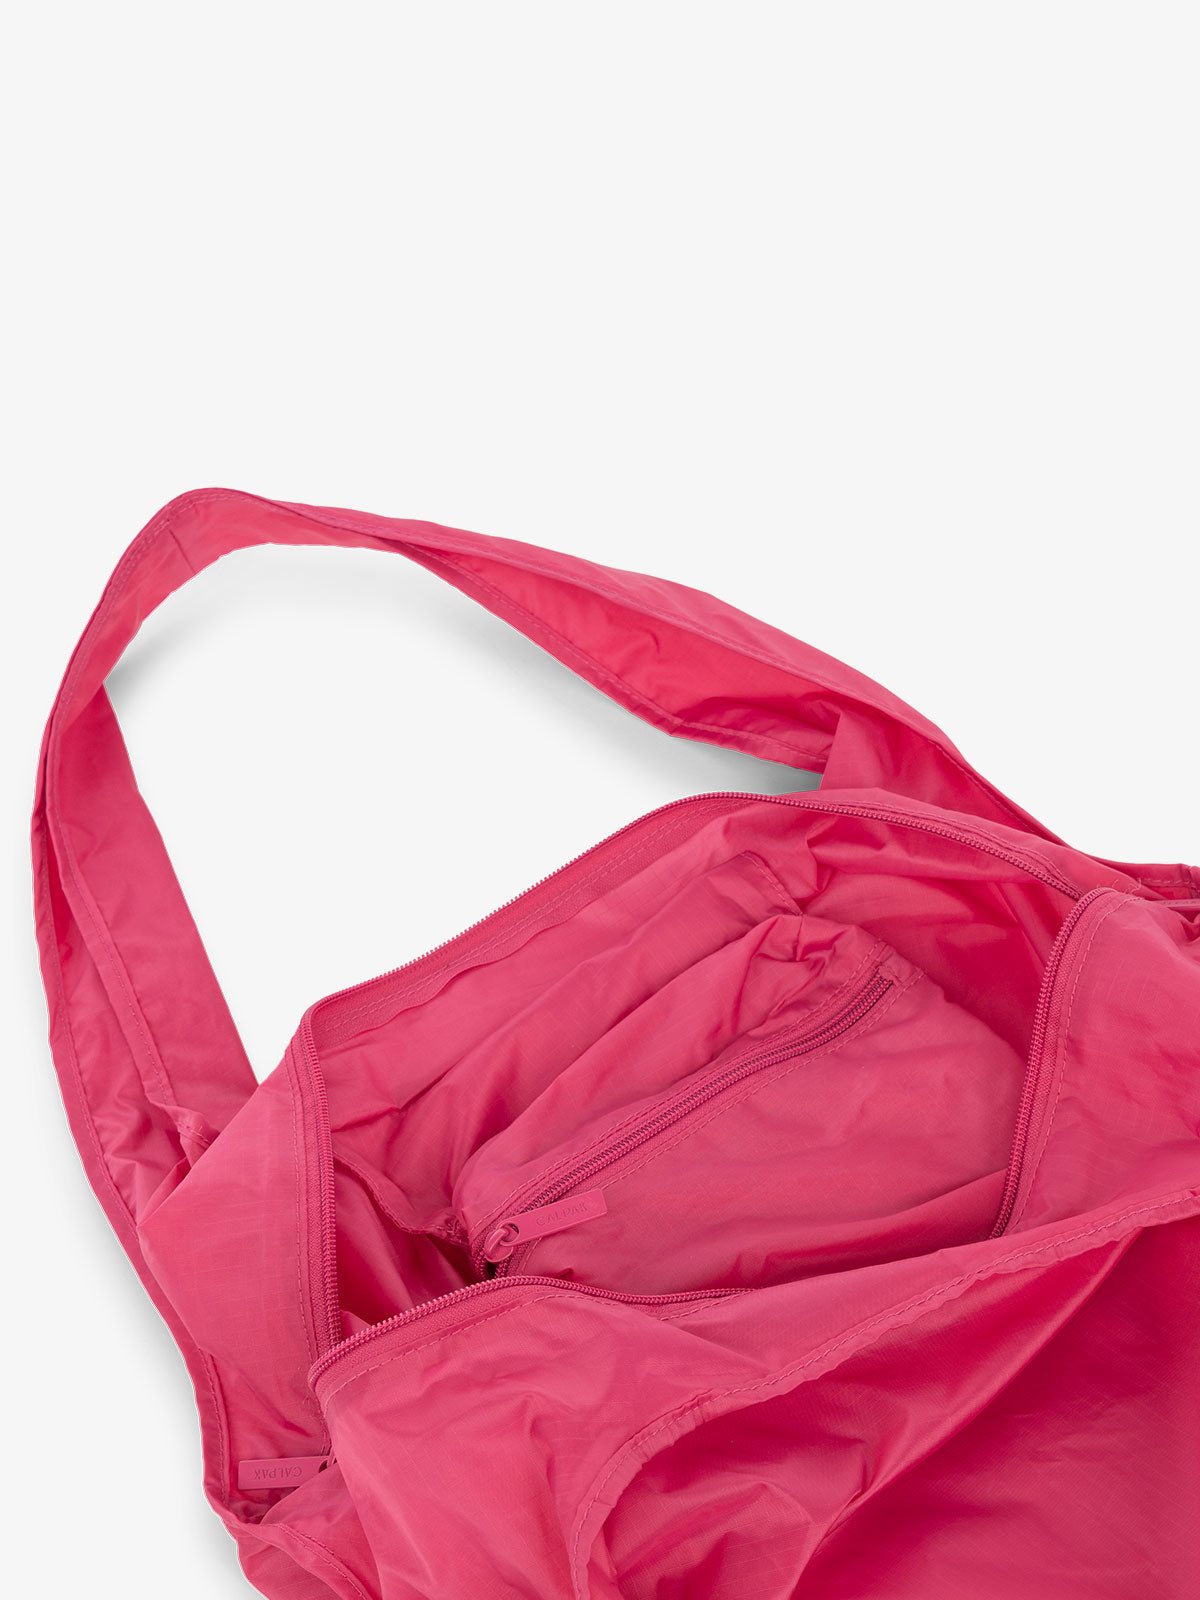 CALPAK Compakt shopping tote bag with interior zipper pocket in dragonfruit pink